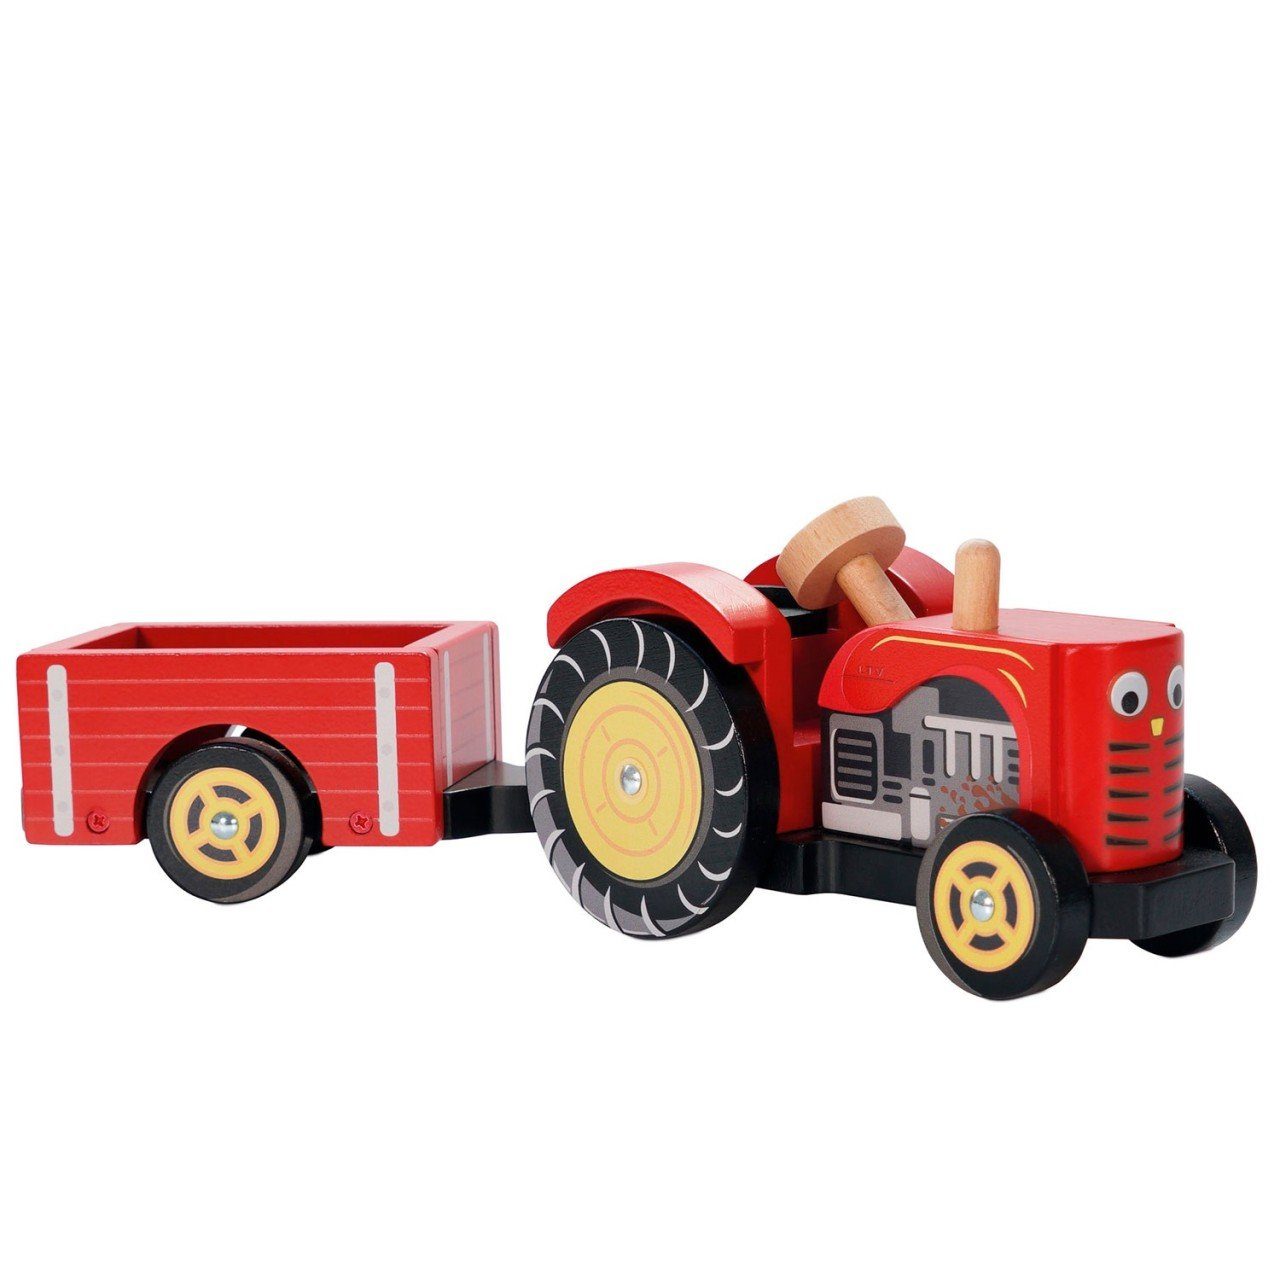 Le Toy Van Spielzeug-Traktor Roter Traktor aus Holz mit Anhänger TV468